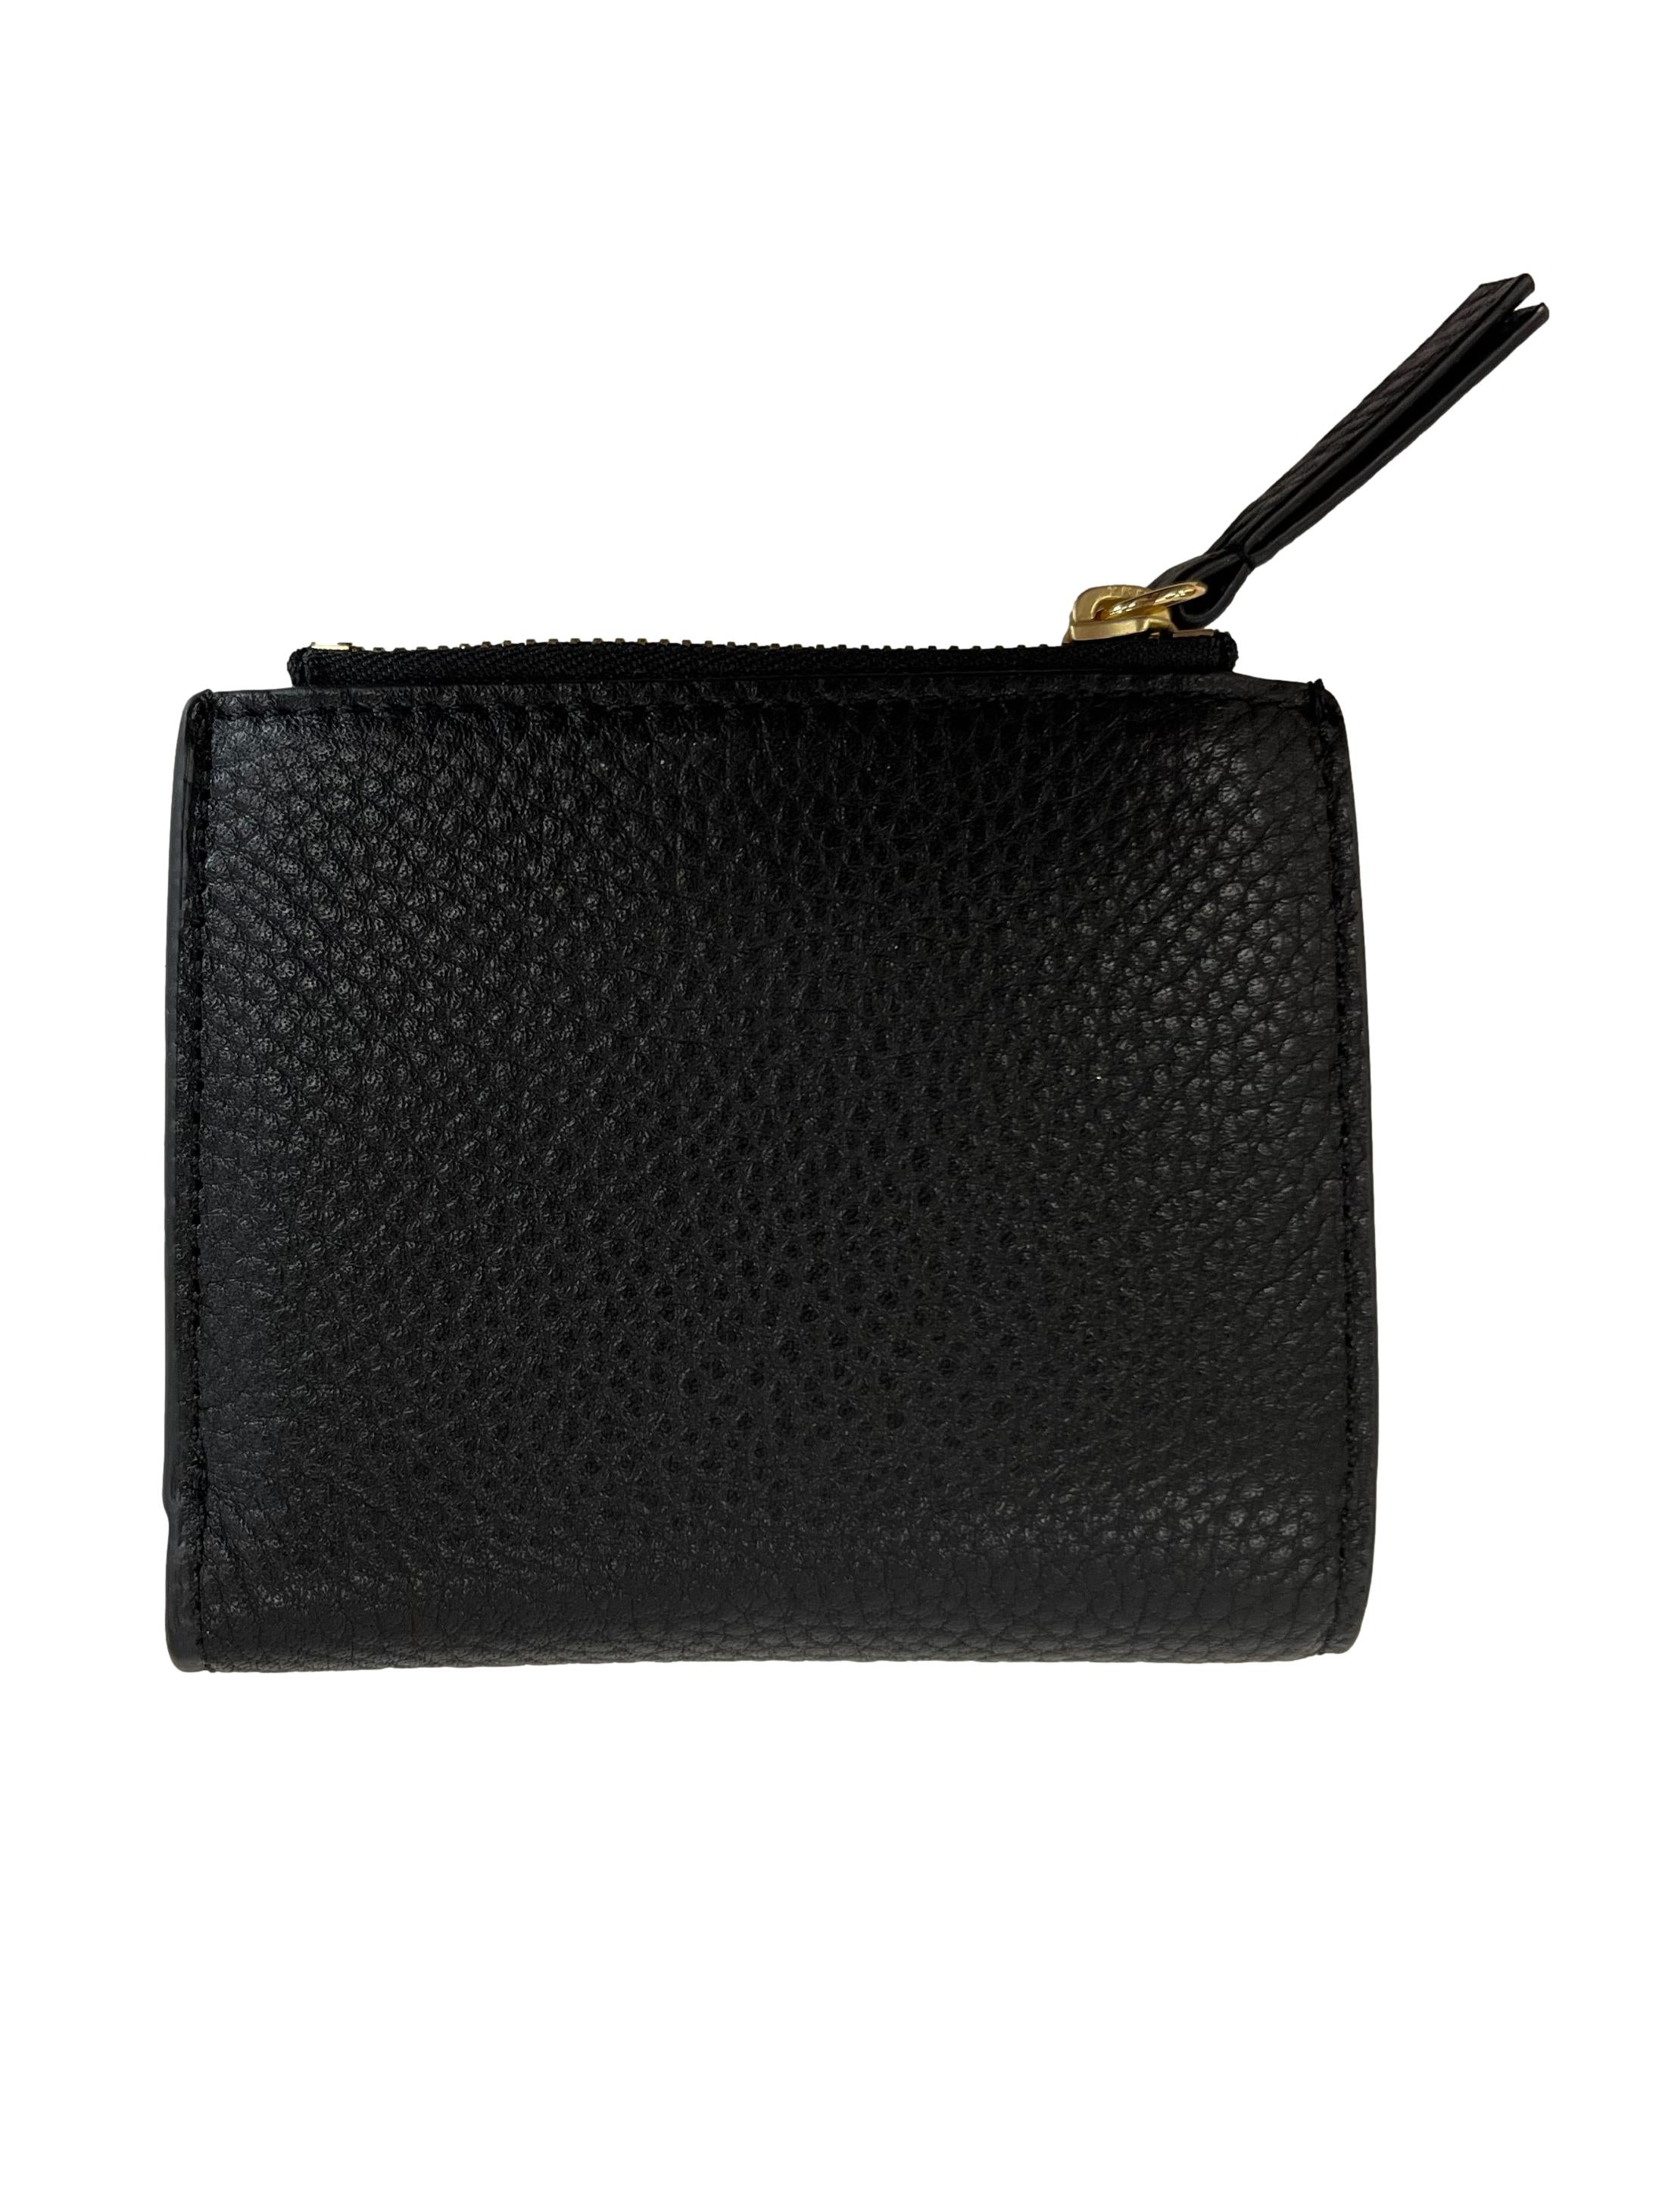 Black Leather Emerson Mini Wallet